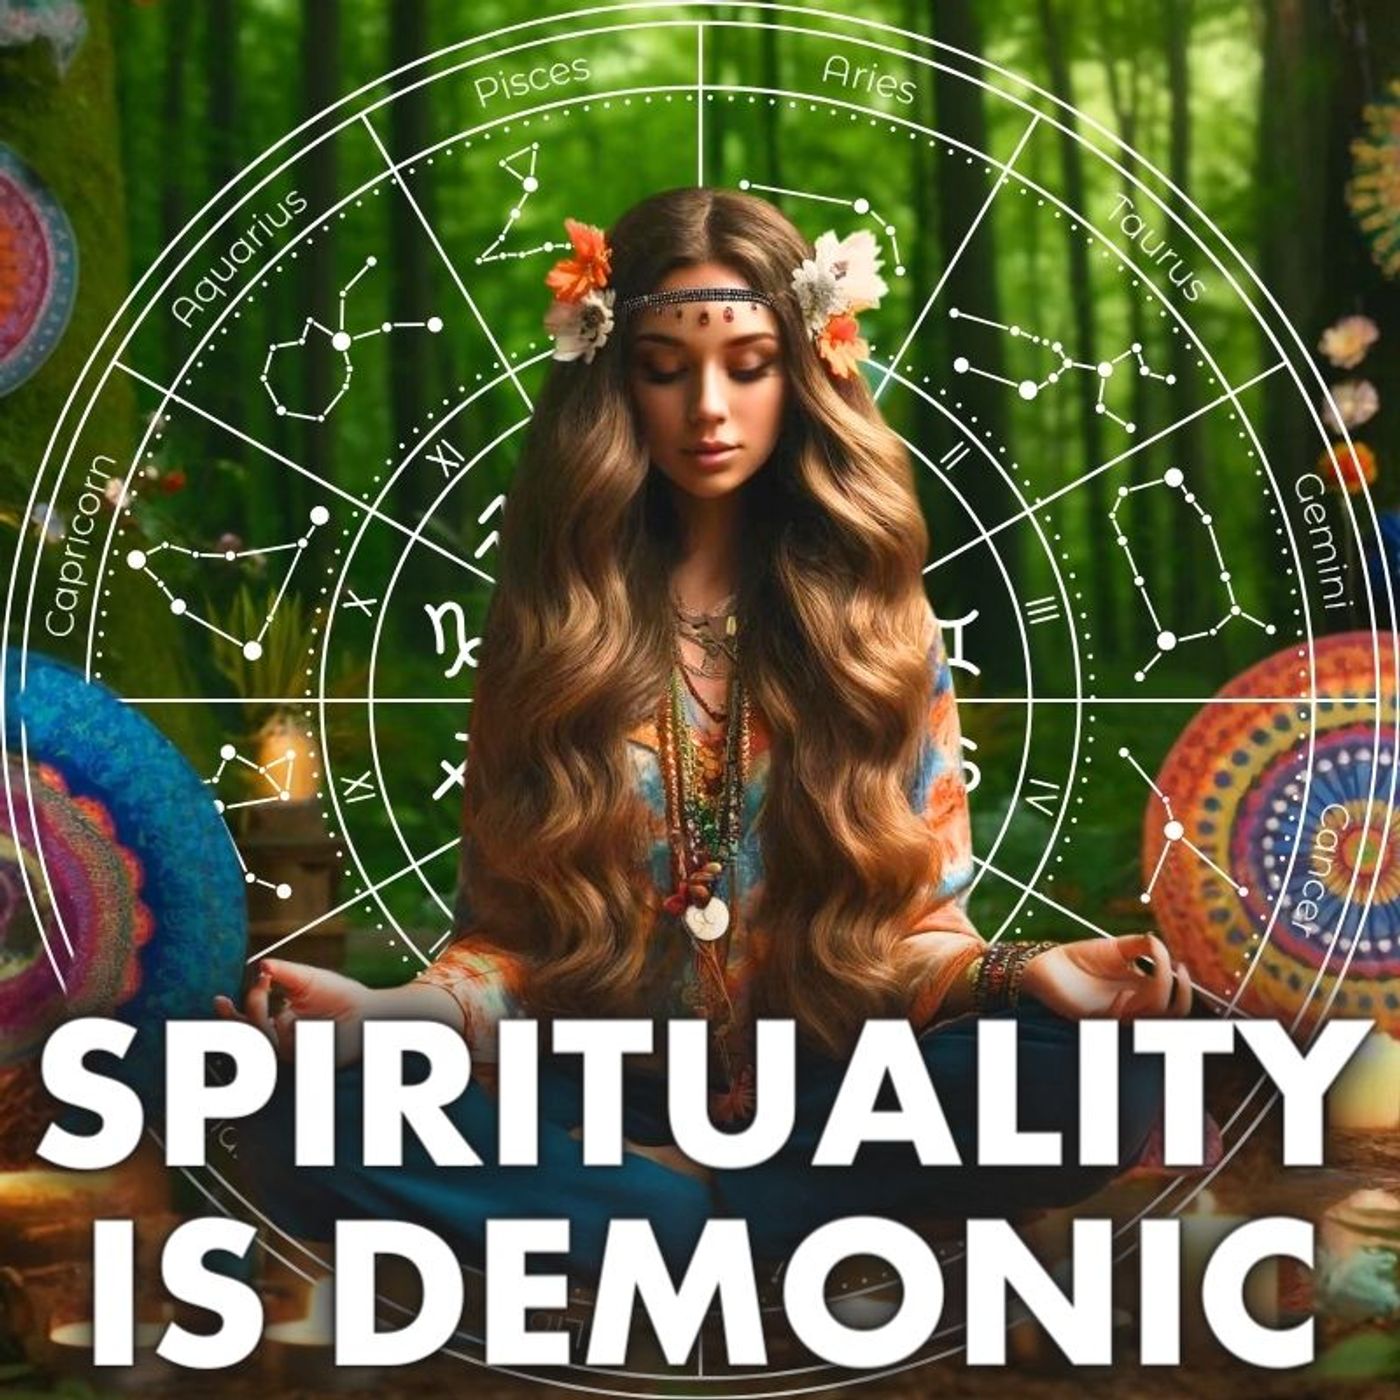 Why ”Spirituality” is Demonic